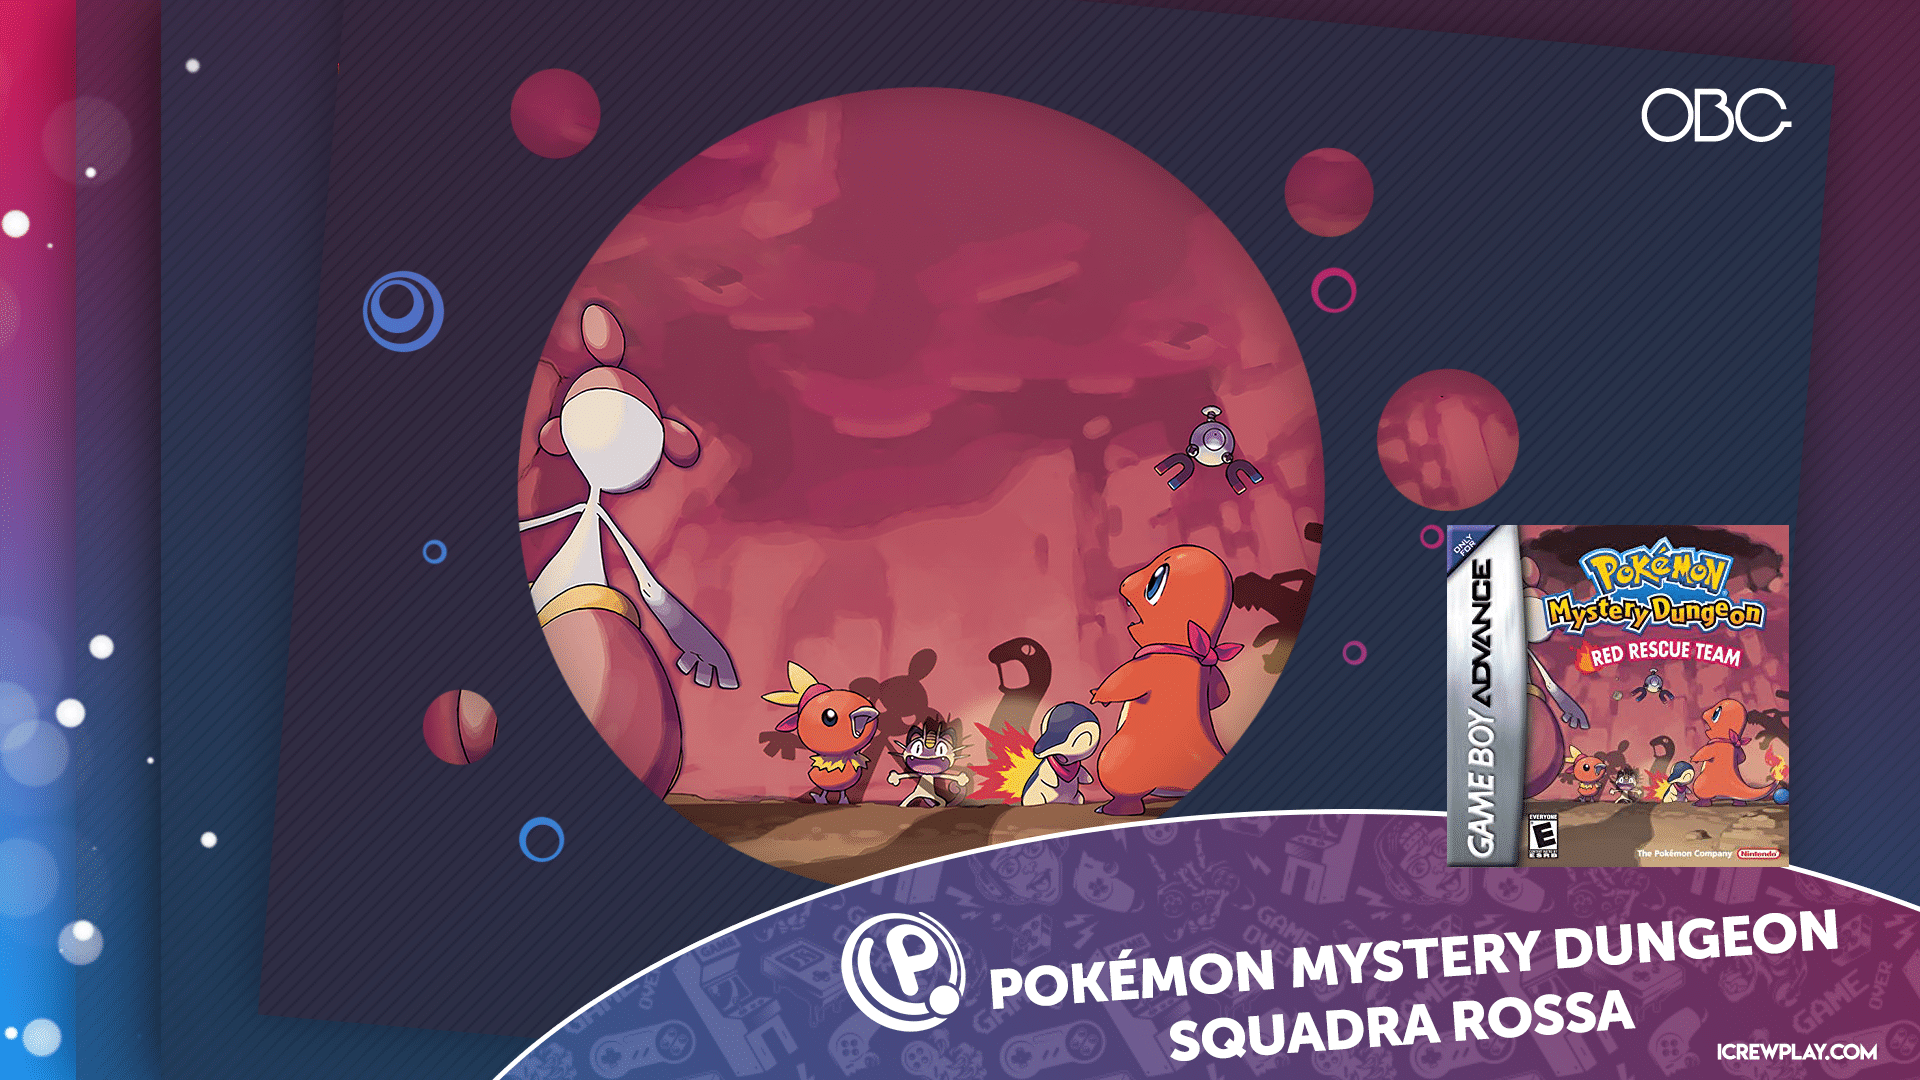 Pokémon Mystery Dungeon Squadra rossa